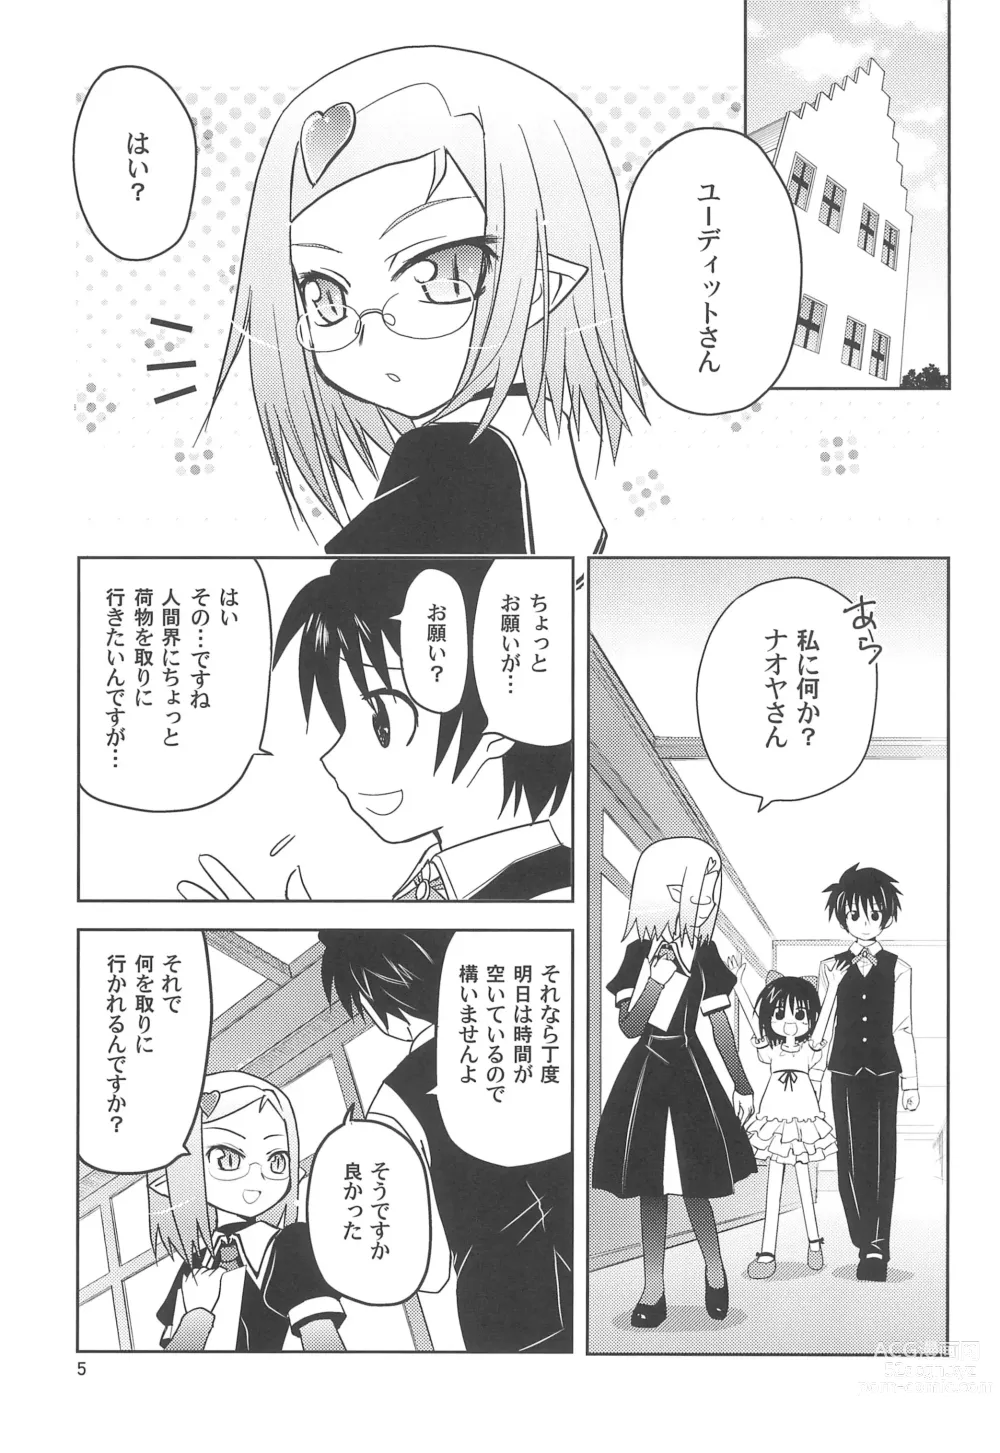 Page 5 of doujinshi Maigo no Maigo no Hime-sama Plus